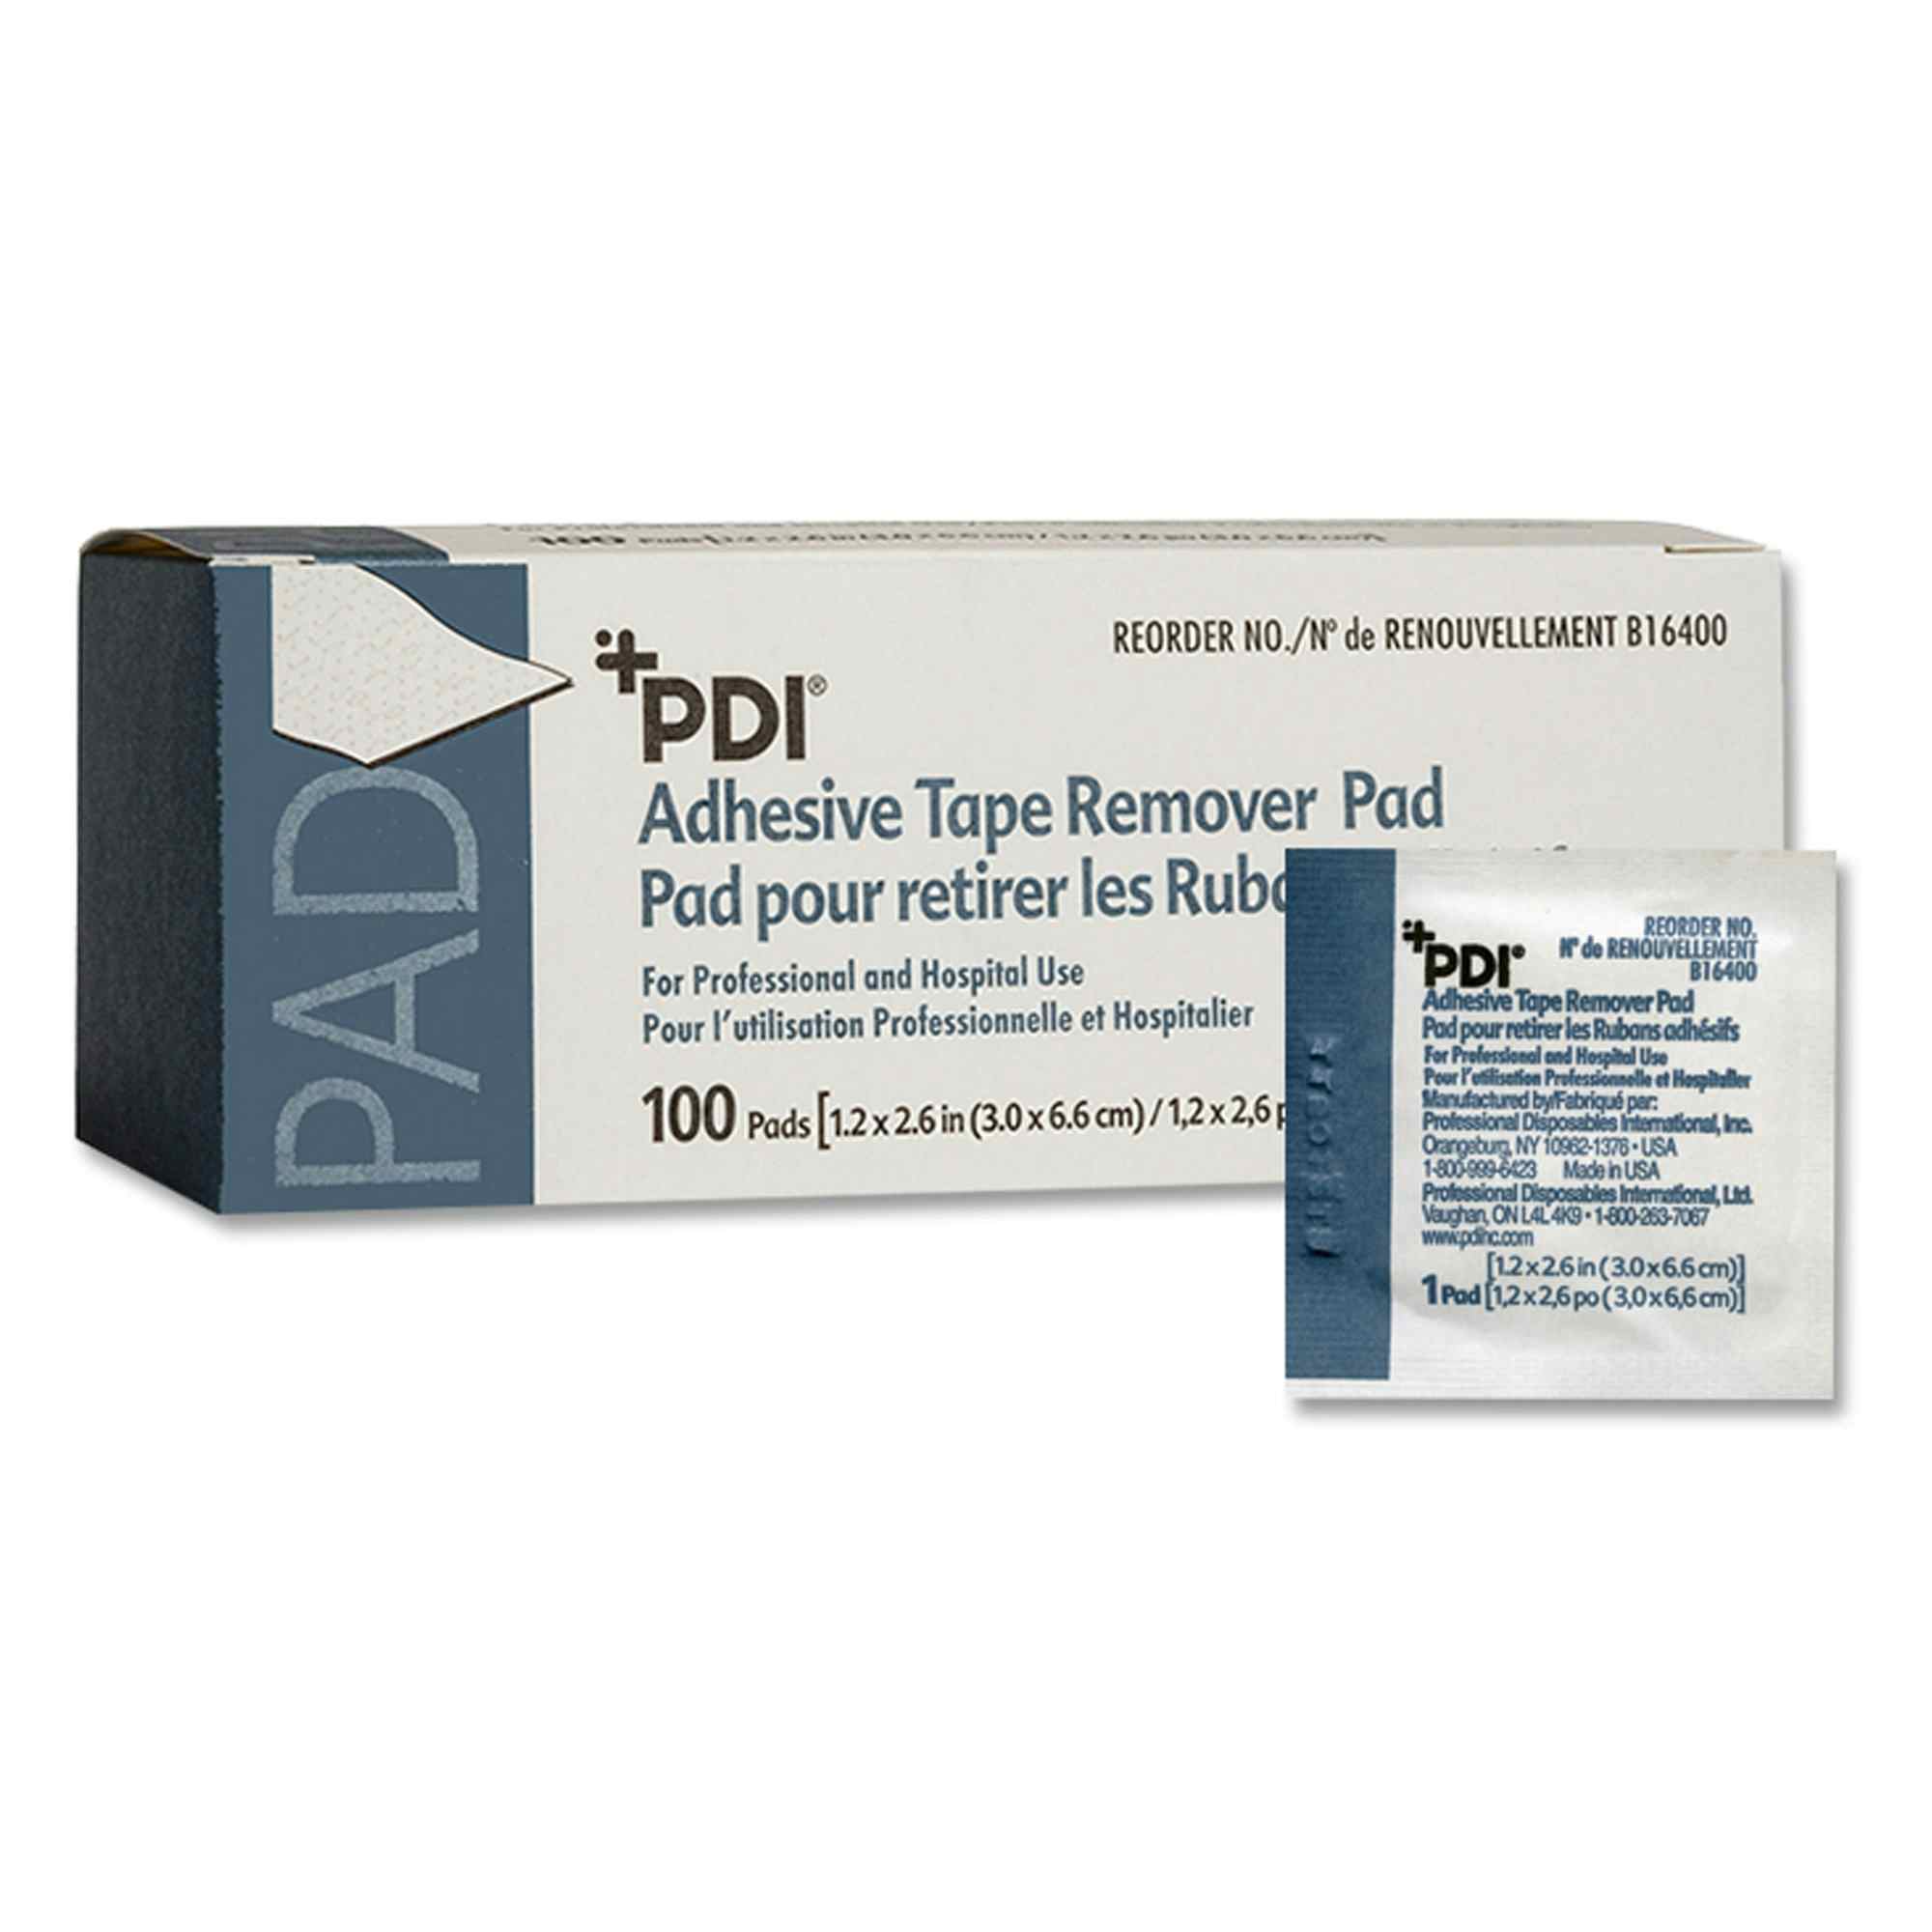 PDI Adhesive Tape Remover Pad, 1-1/4 X 2-5/8" , B16400, Box of 100